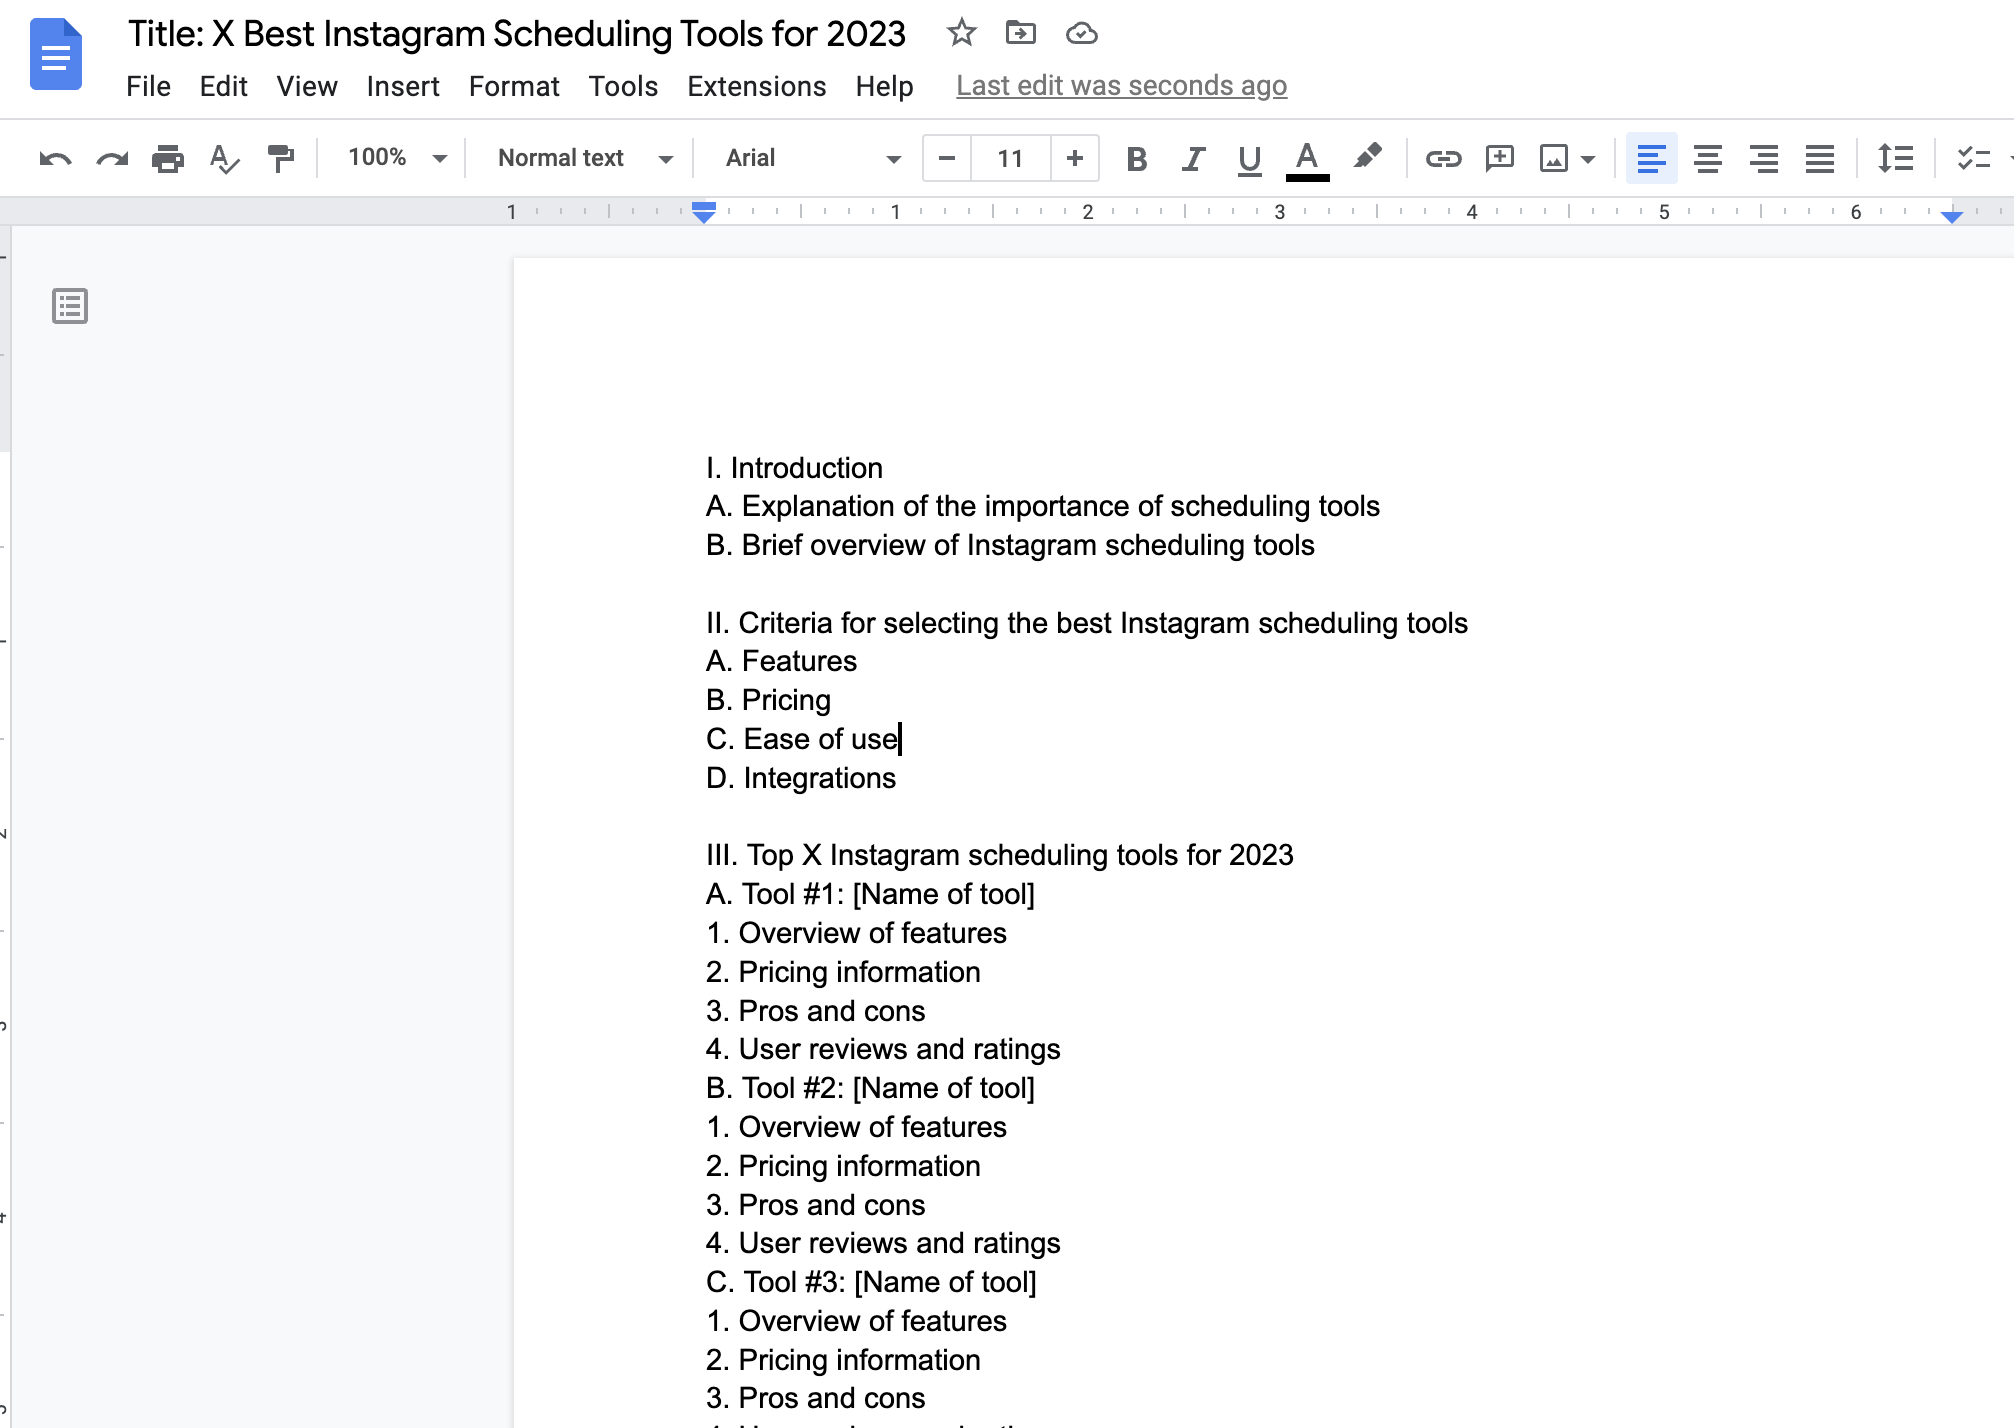 Google Docs outline for "X Instagram Scheduling Tools"